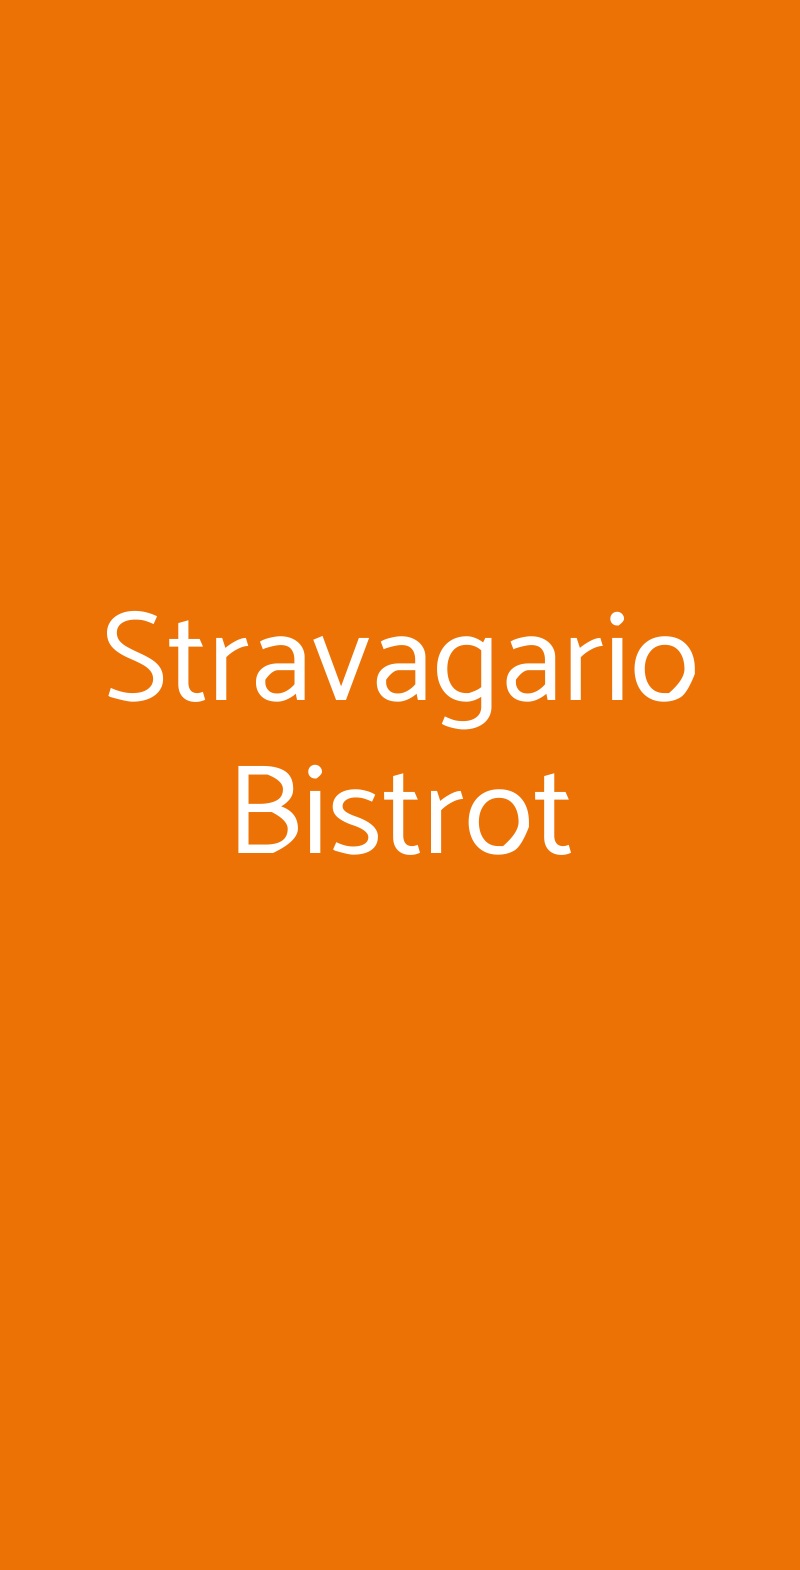 Stravagario Bistrot Milano menù 1 pagina